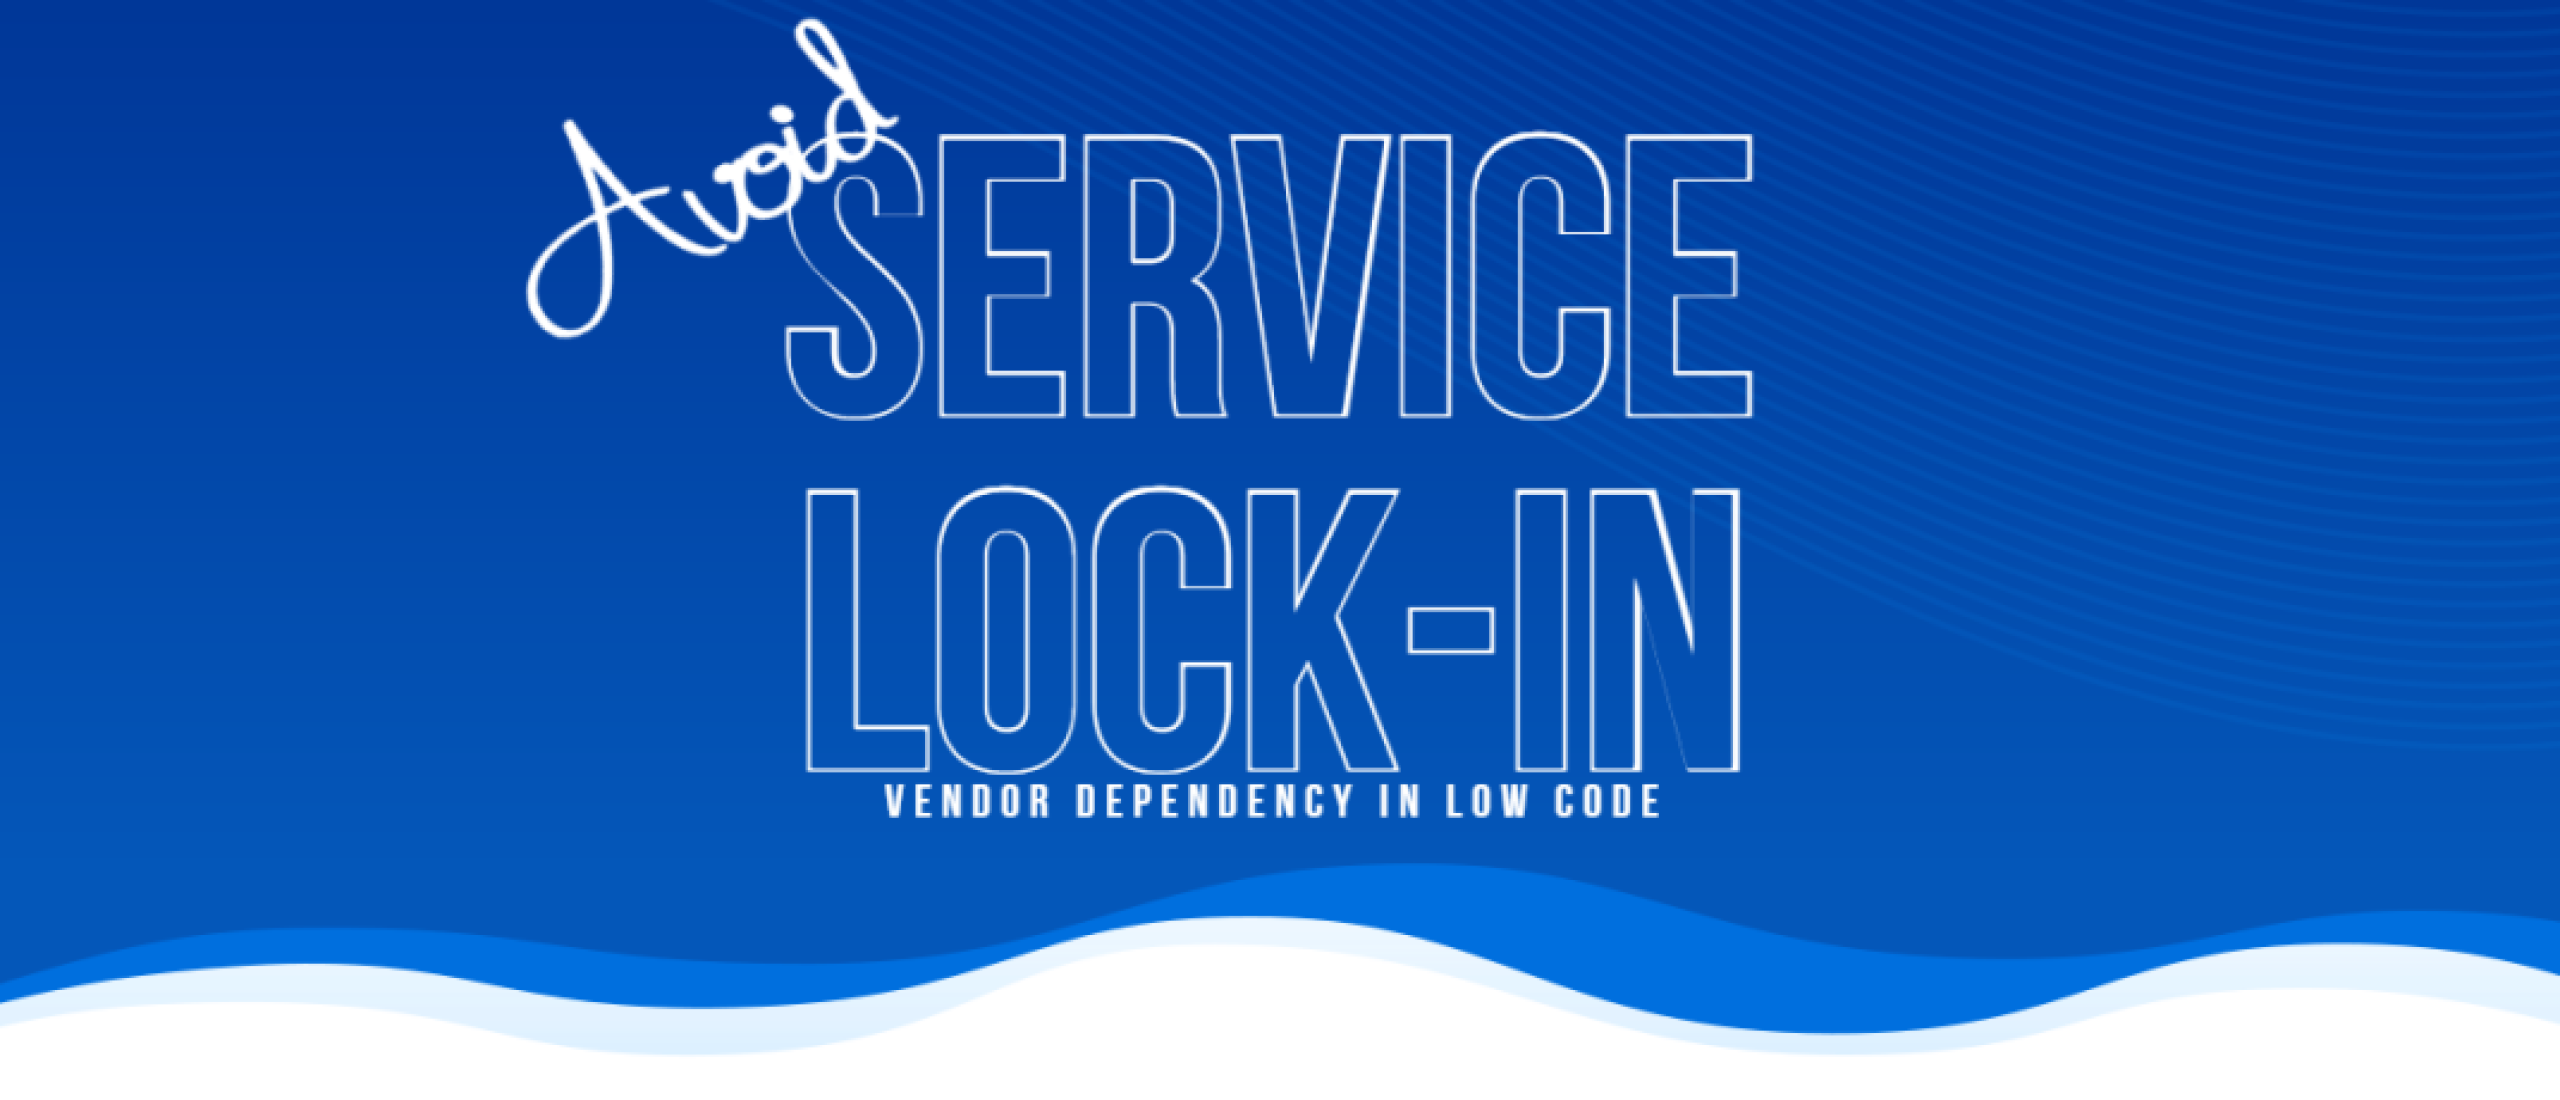 Service lock-in in Low-Code